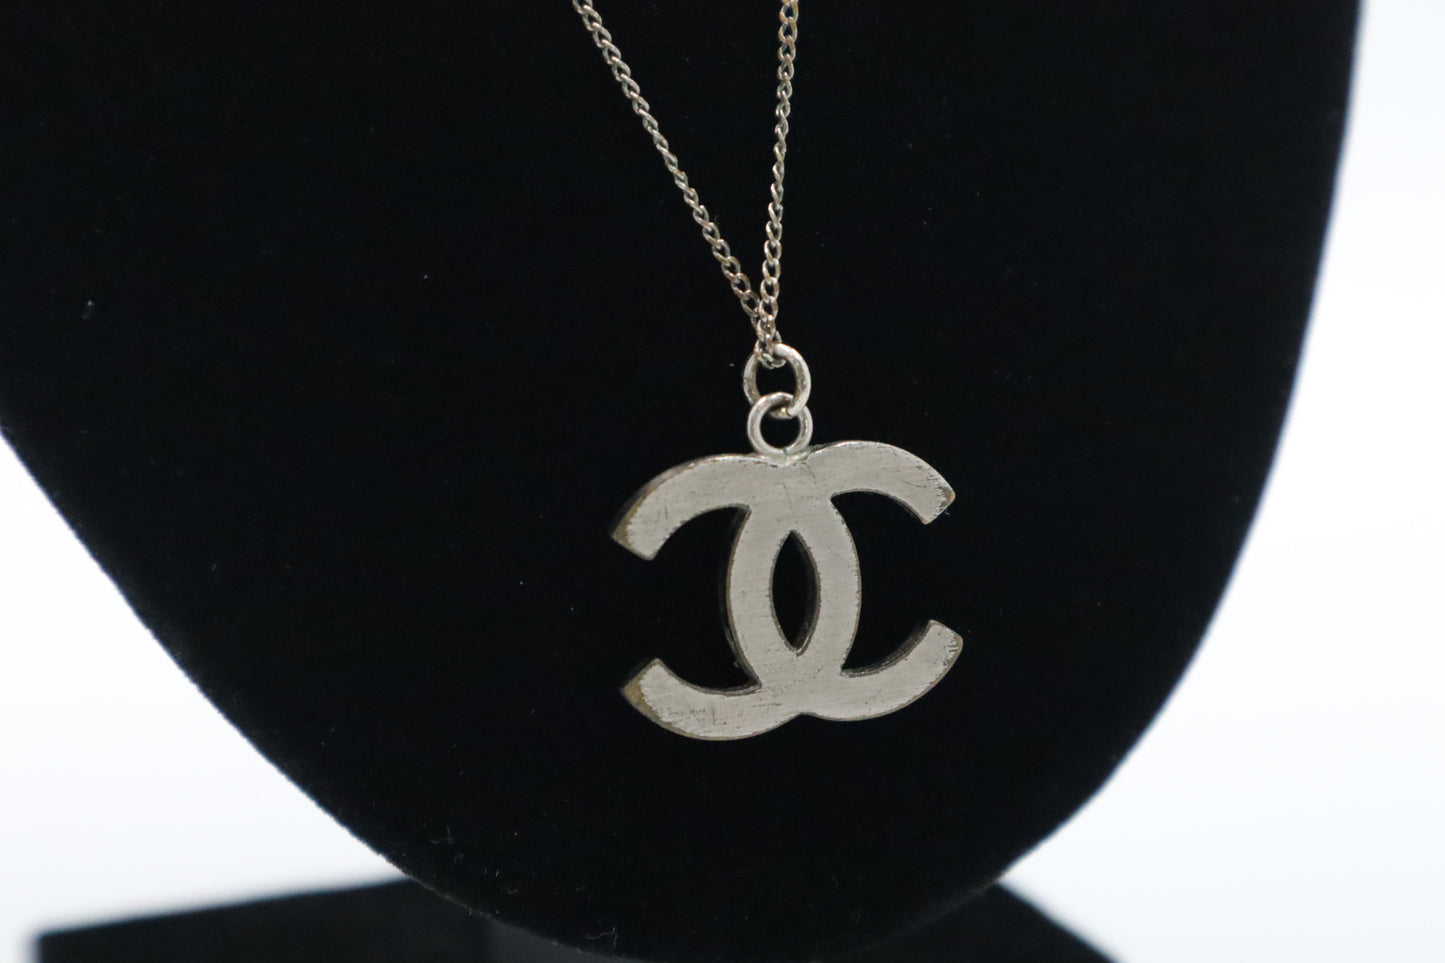 Chanel CC Necklace